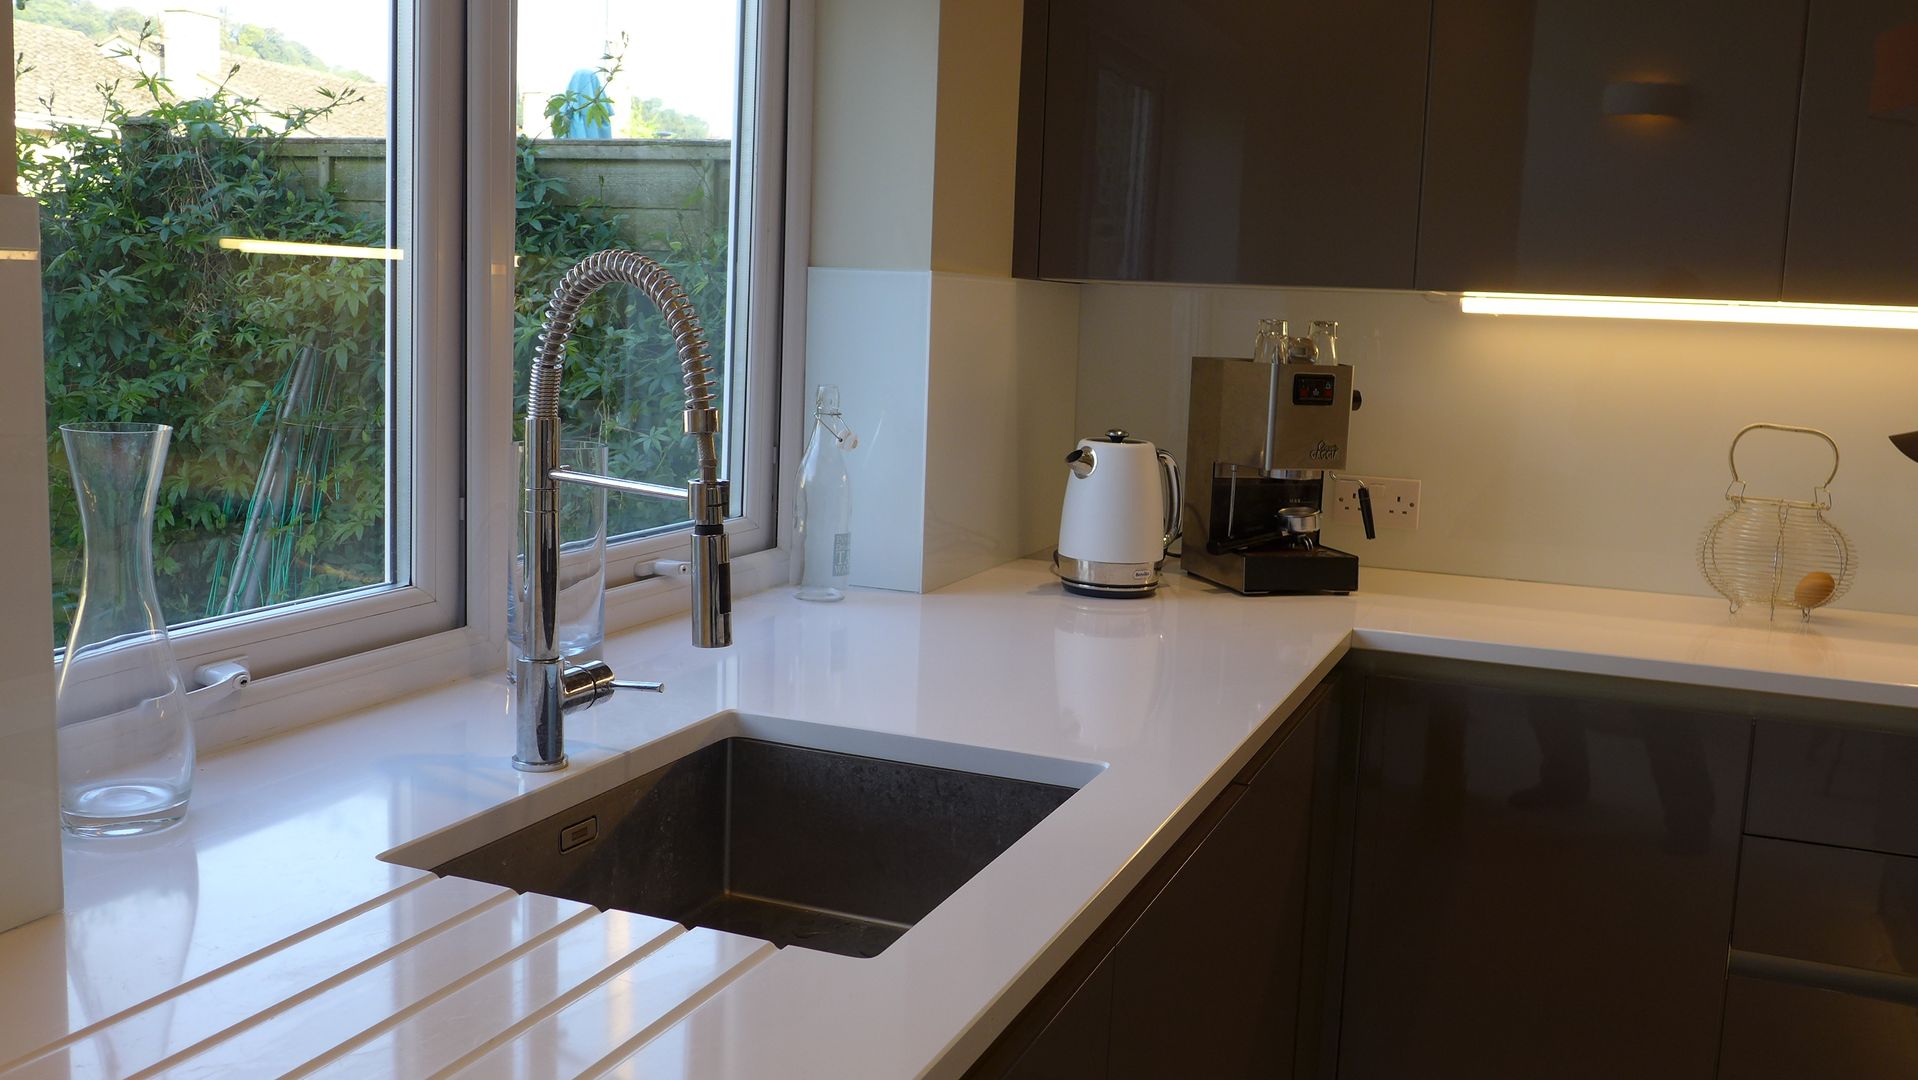 White quartz worktop with undermount sink Style Within Nhà bếp phong cách hiện đại kitchen tap,undermount sink,quartz worktop,white worktop,grey kitchen,swan neck tap,flexible tap,pelmet light